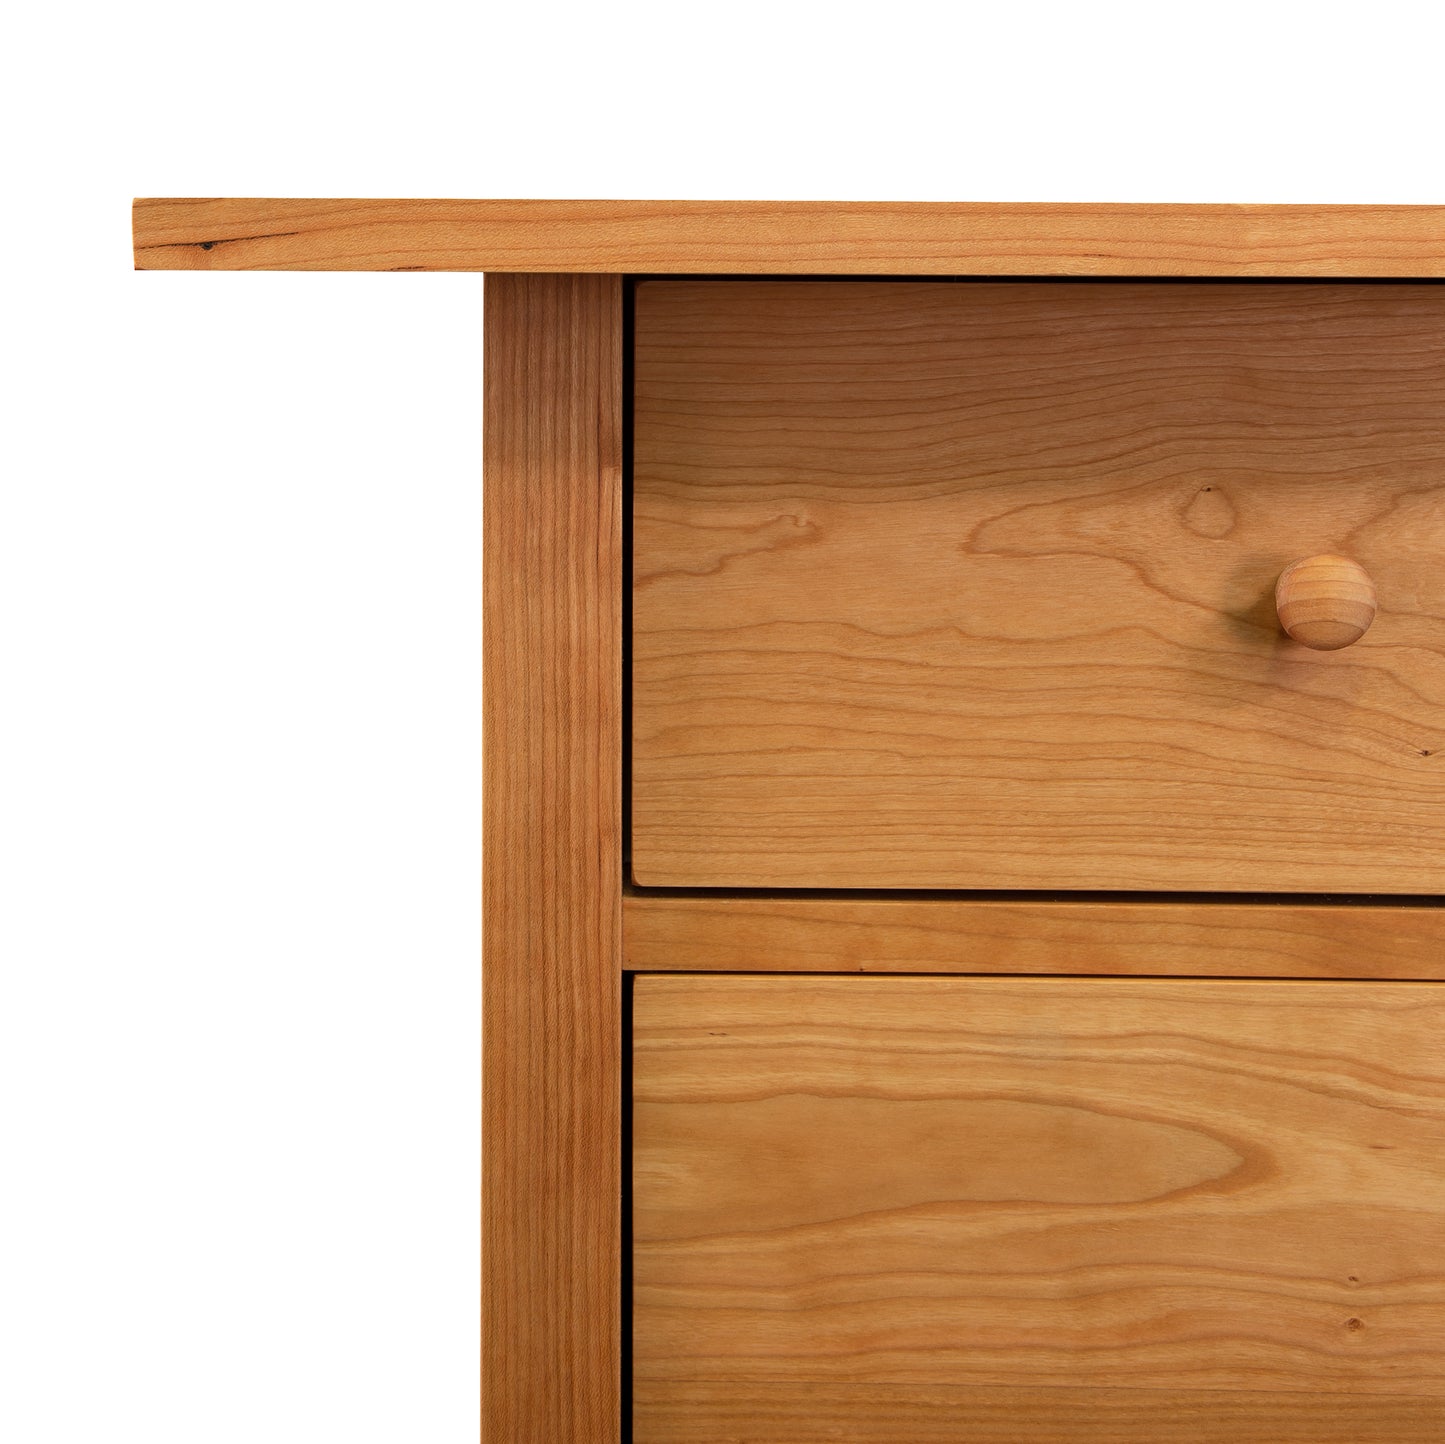 A close up of a Vermont Furniture Designs Burlington Shaker Executive Desk - Floor Model.